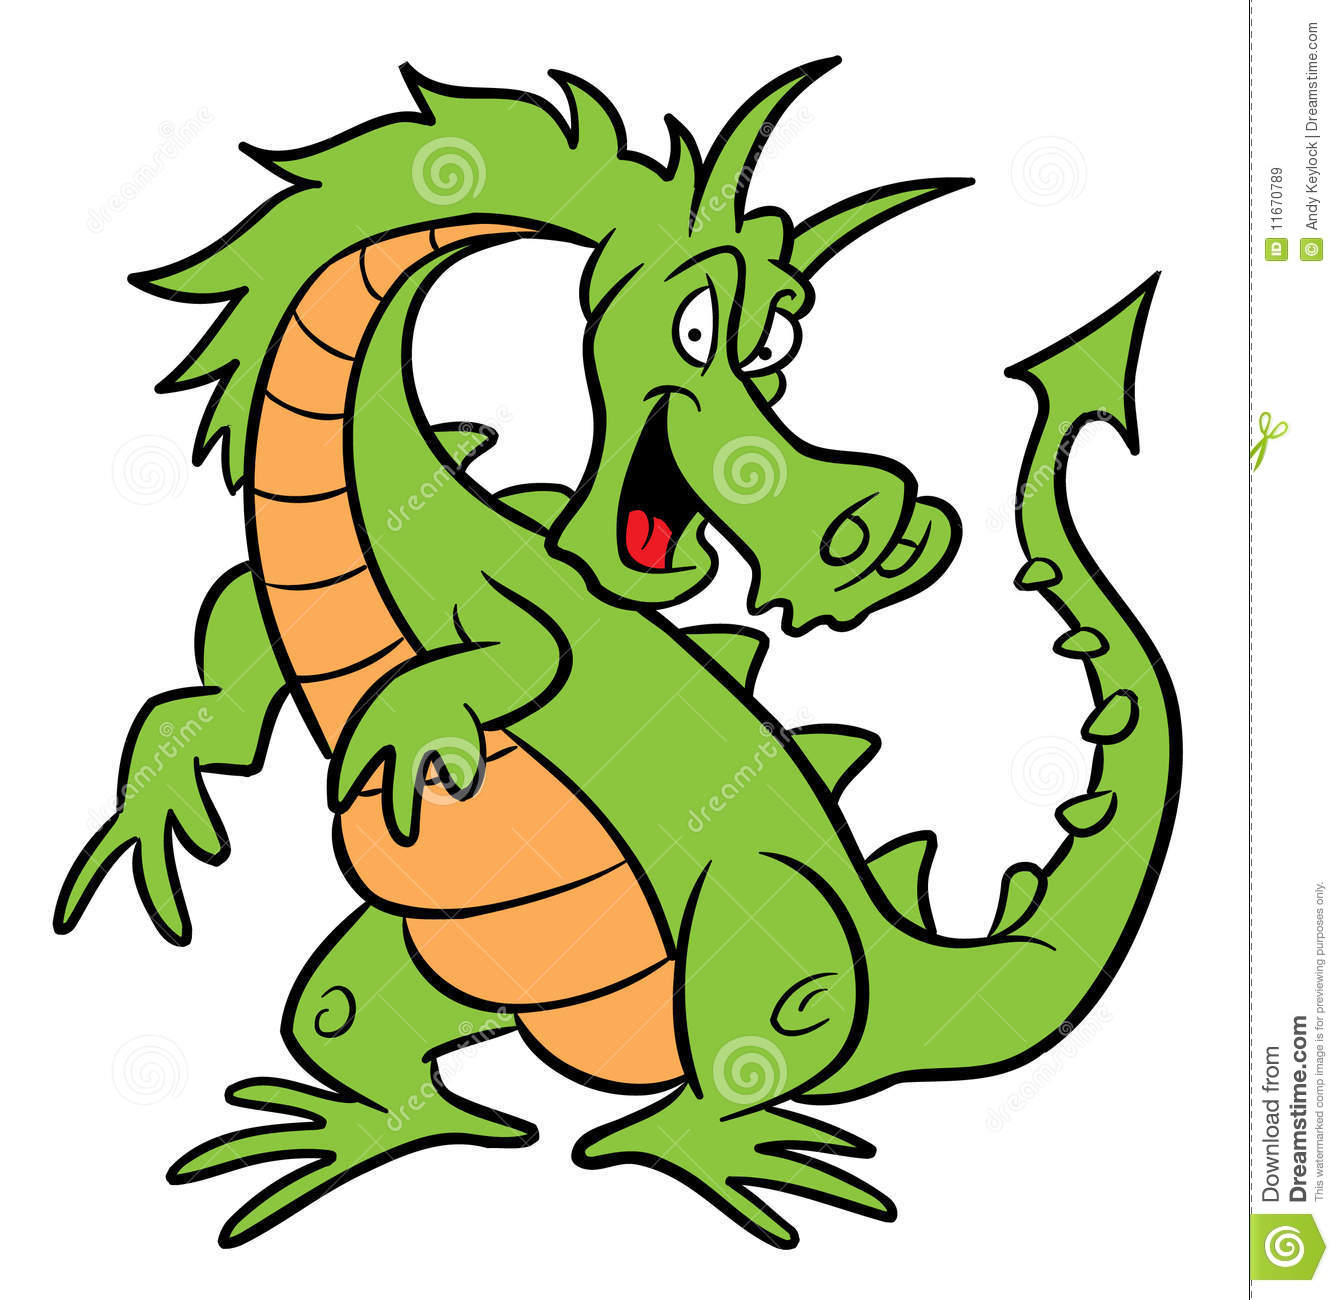 Green Dragon Cartoon Illustration Royalty Free Stock Images   Image